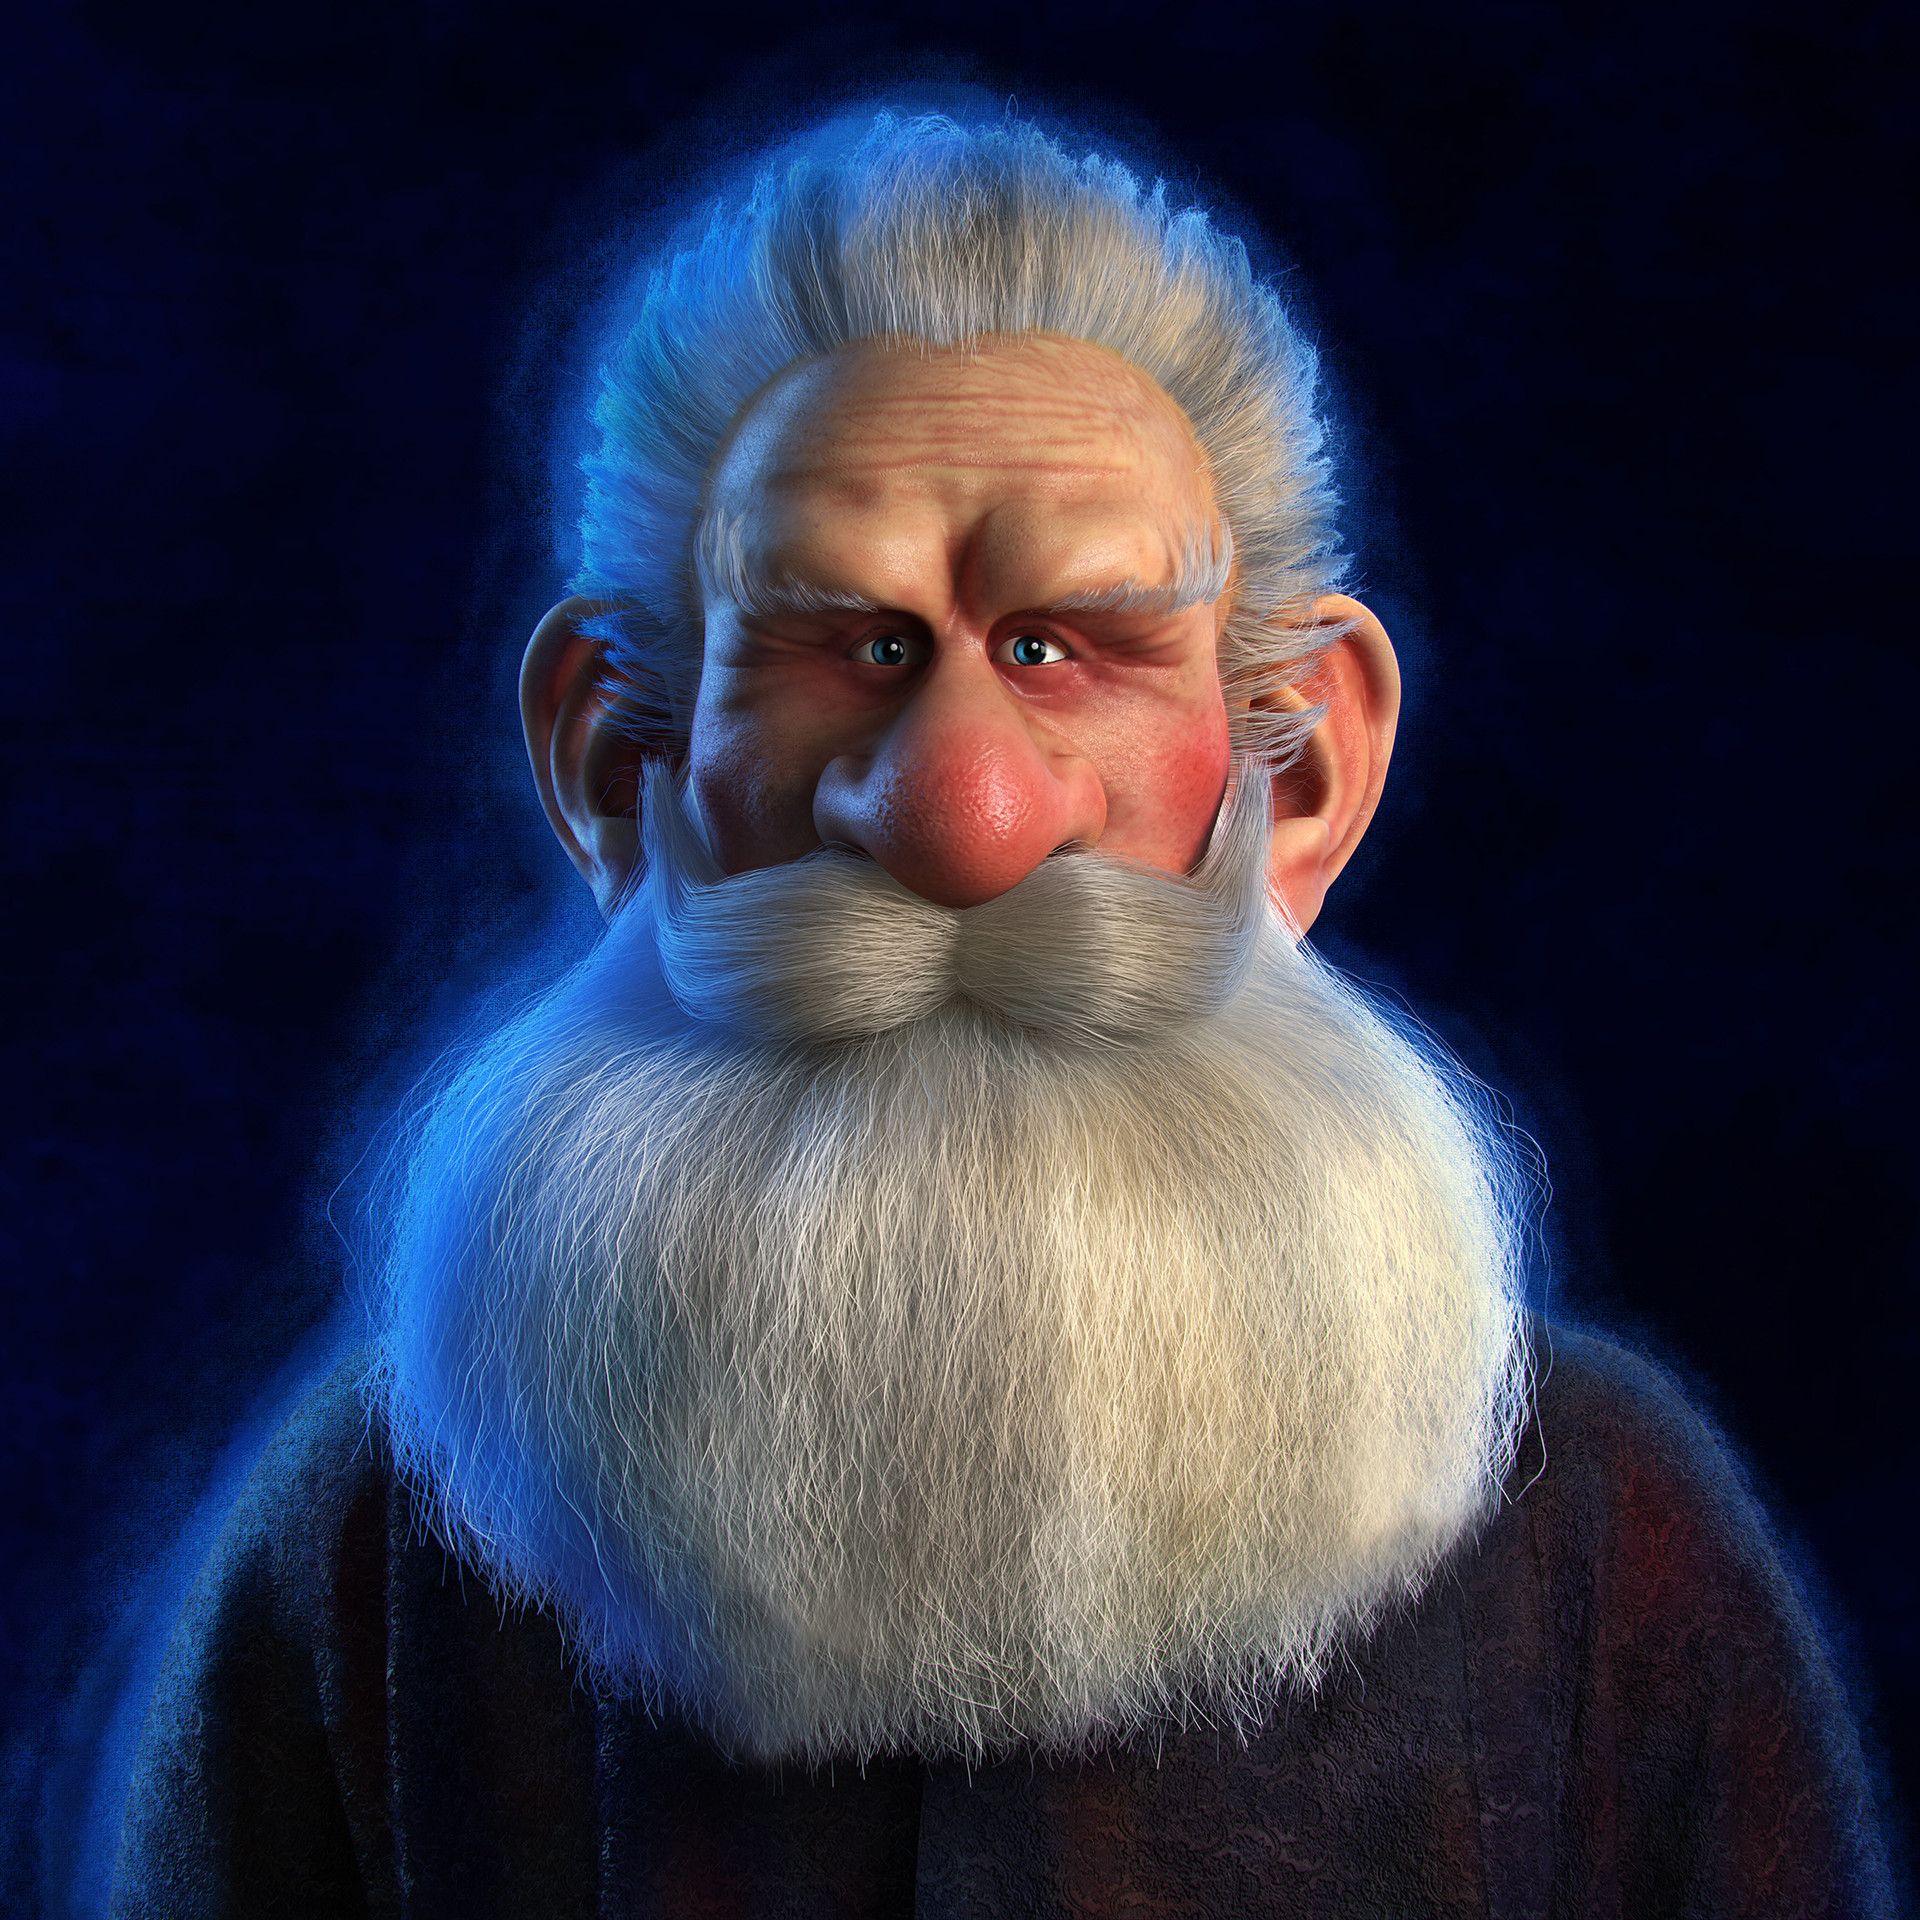 stillewillem: portrait of a businessman with a beard, 3dpeople, (gigachad :0.4)